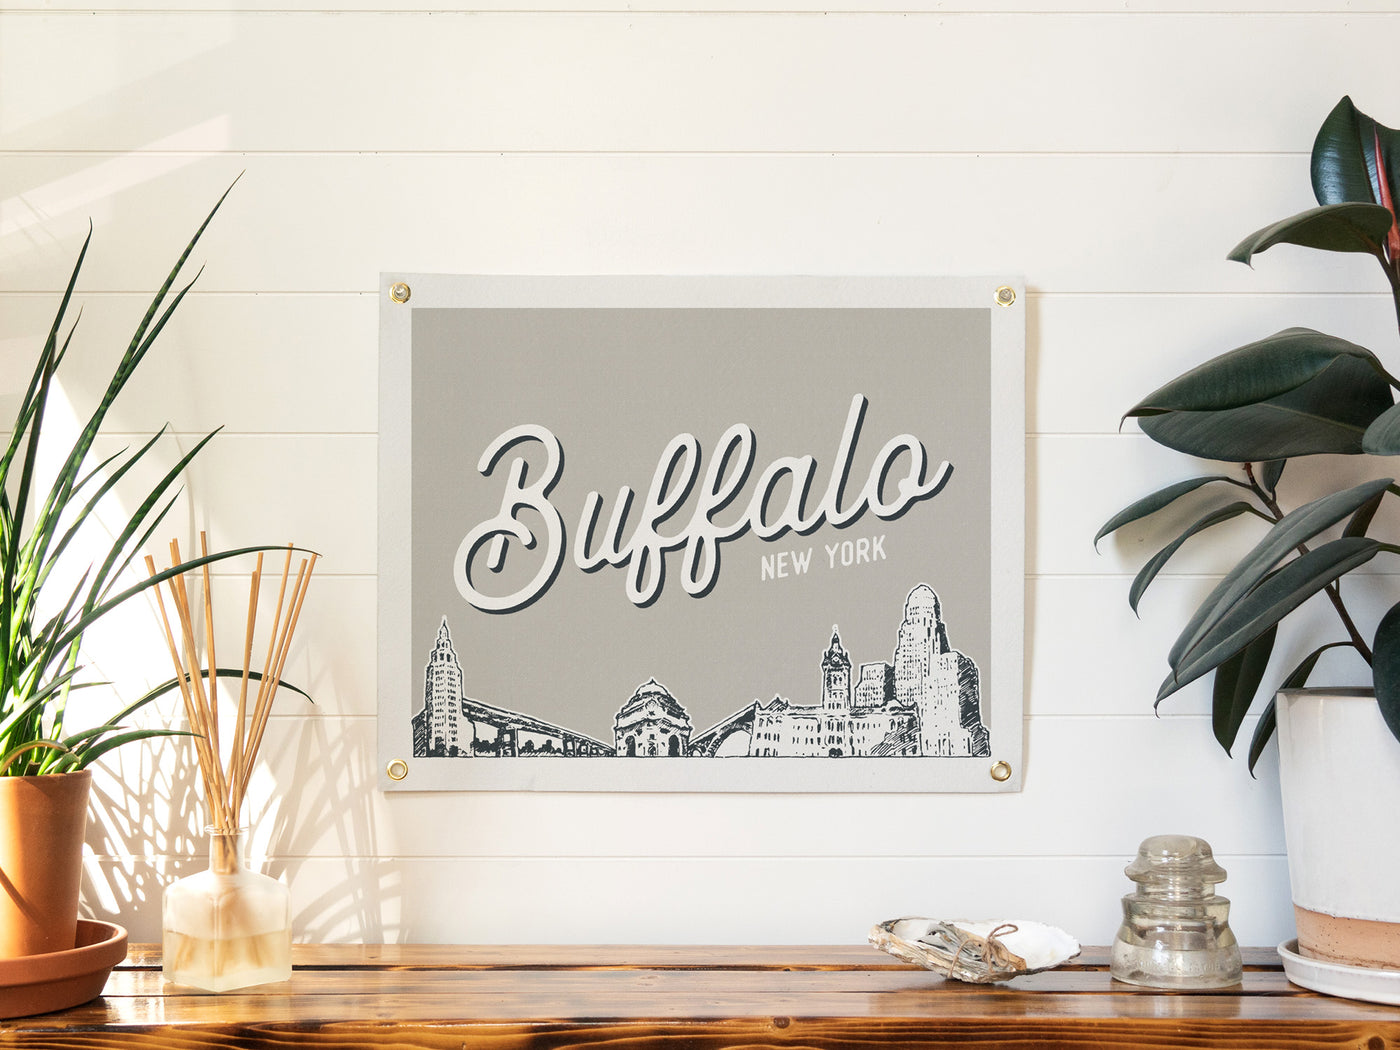 Buffalo, New York